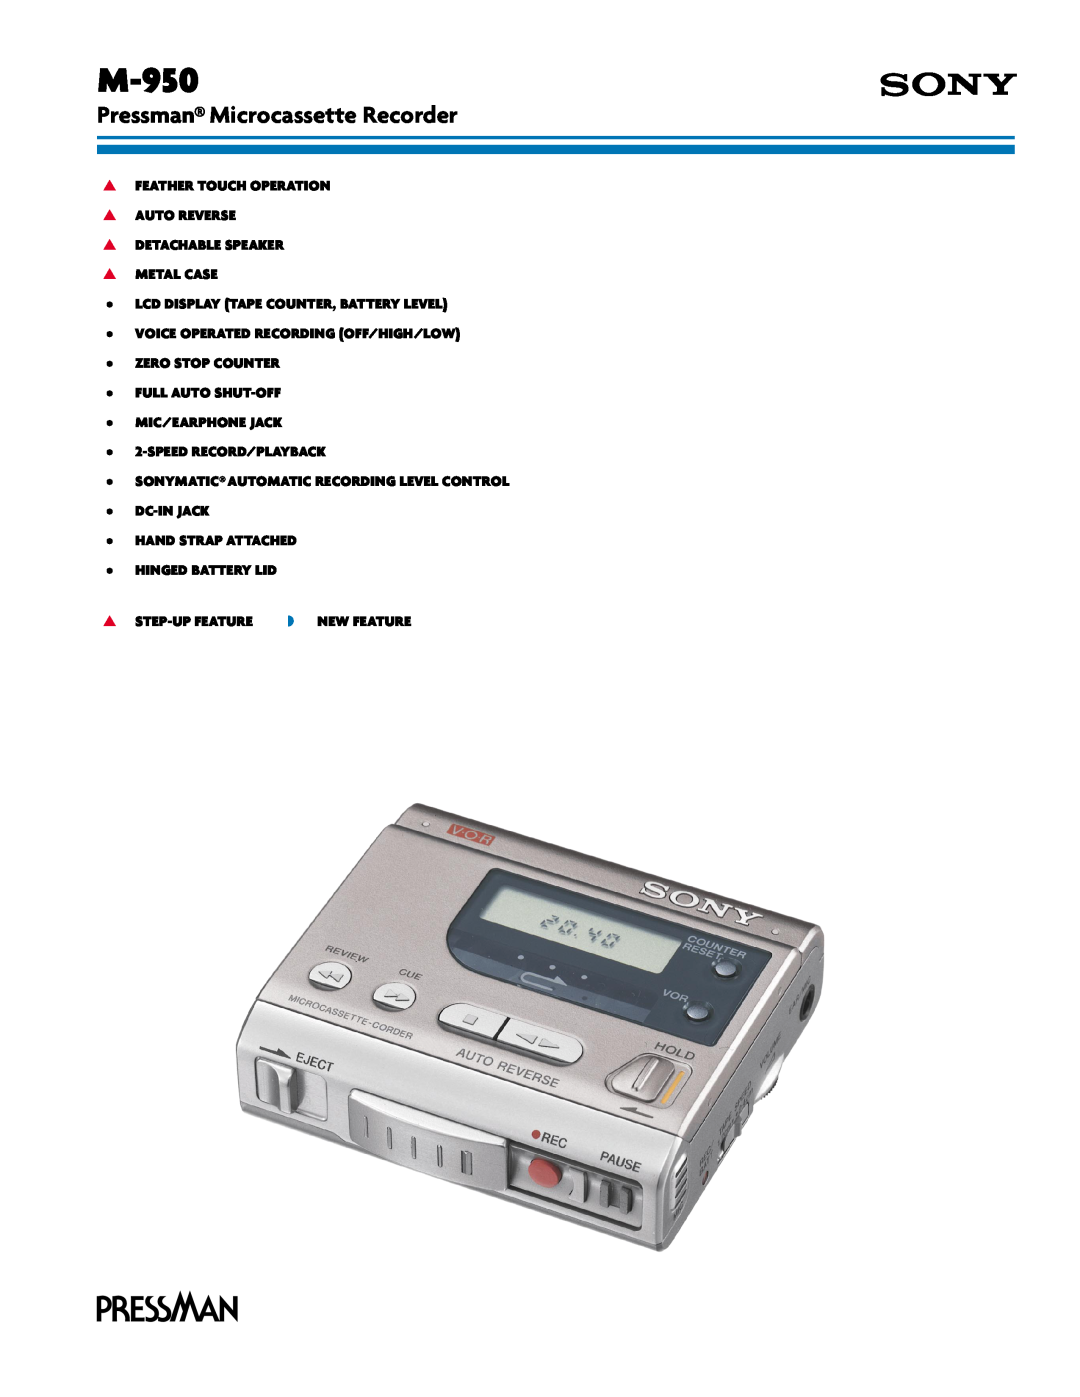 Sony M-950 manual Pressman Microcassette Recorder 